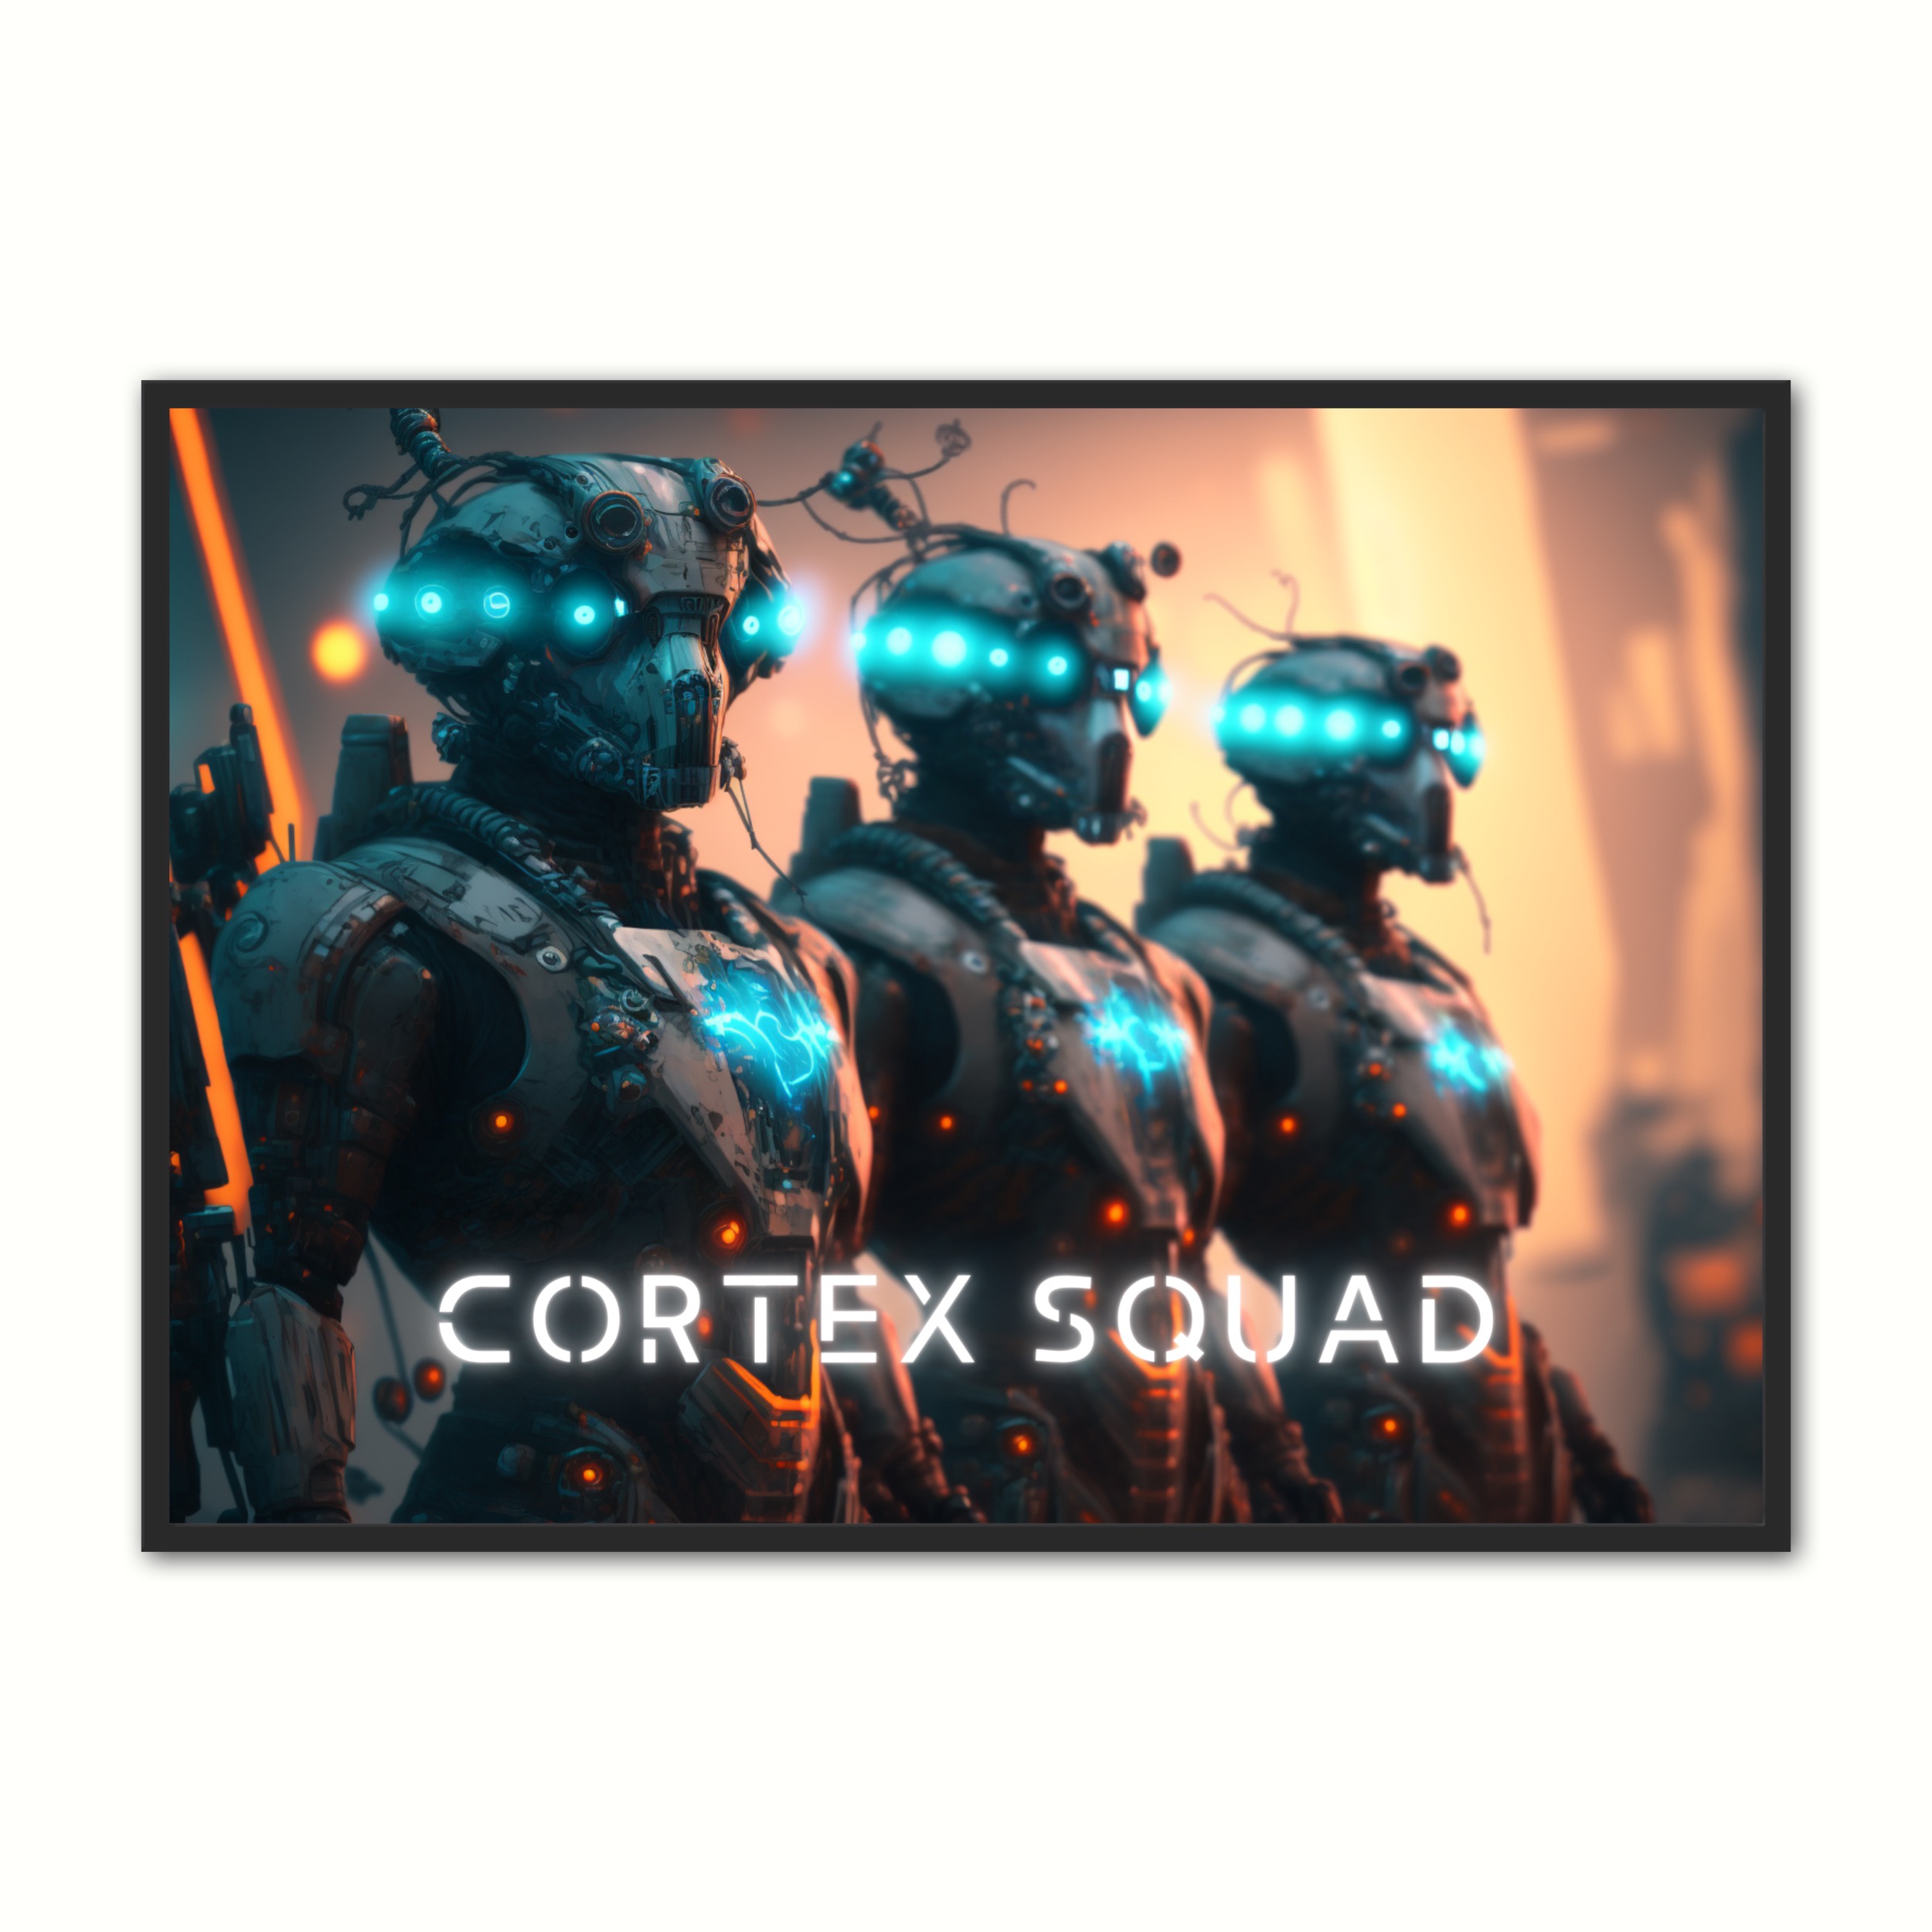 Se Plakat med Cortex Squad - Android 30 x 40 cm hos Nyplakat.dk